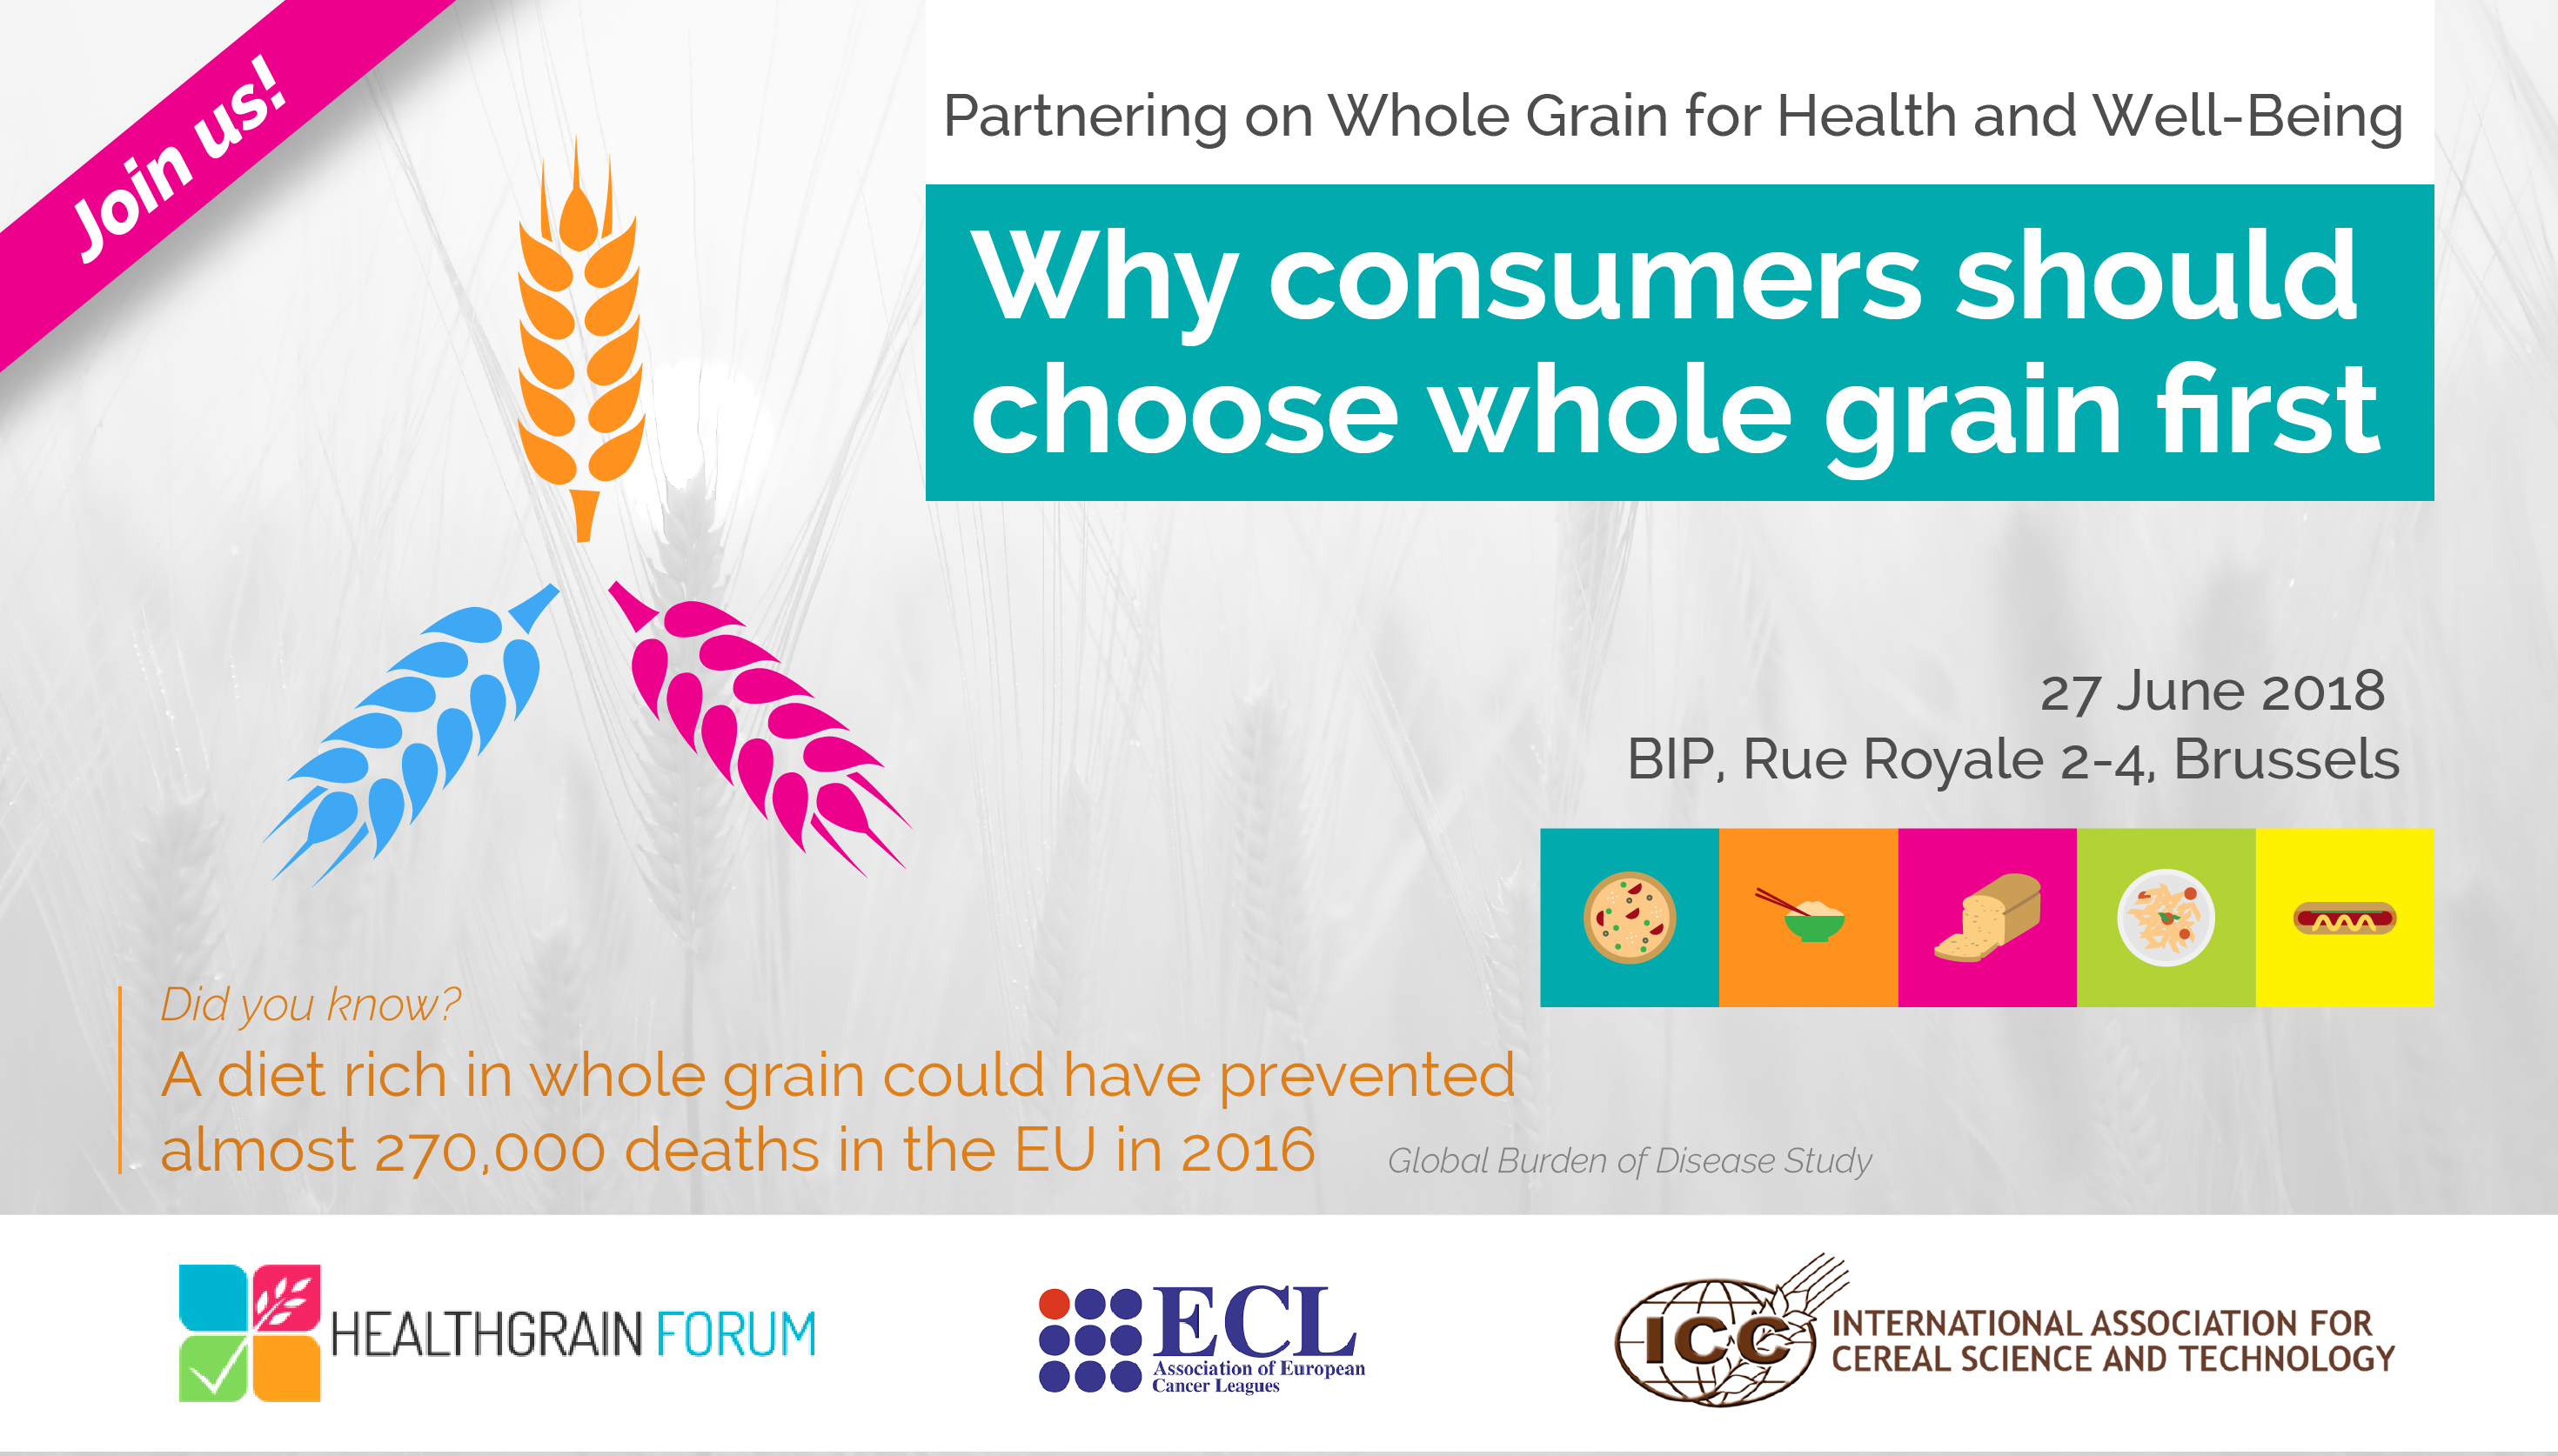 EU Whole Grain Public-Private Partnership Meeting